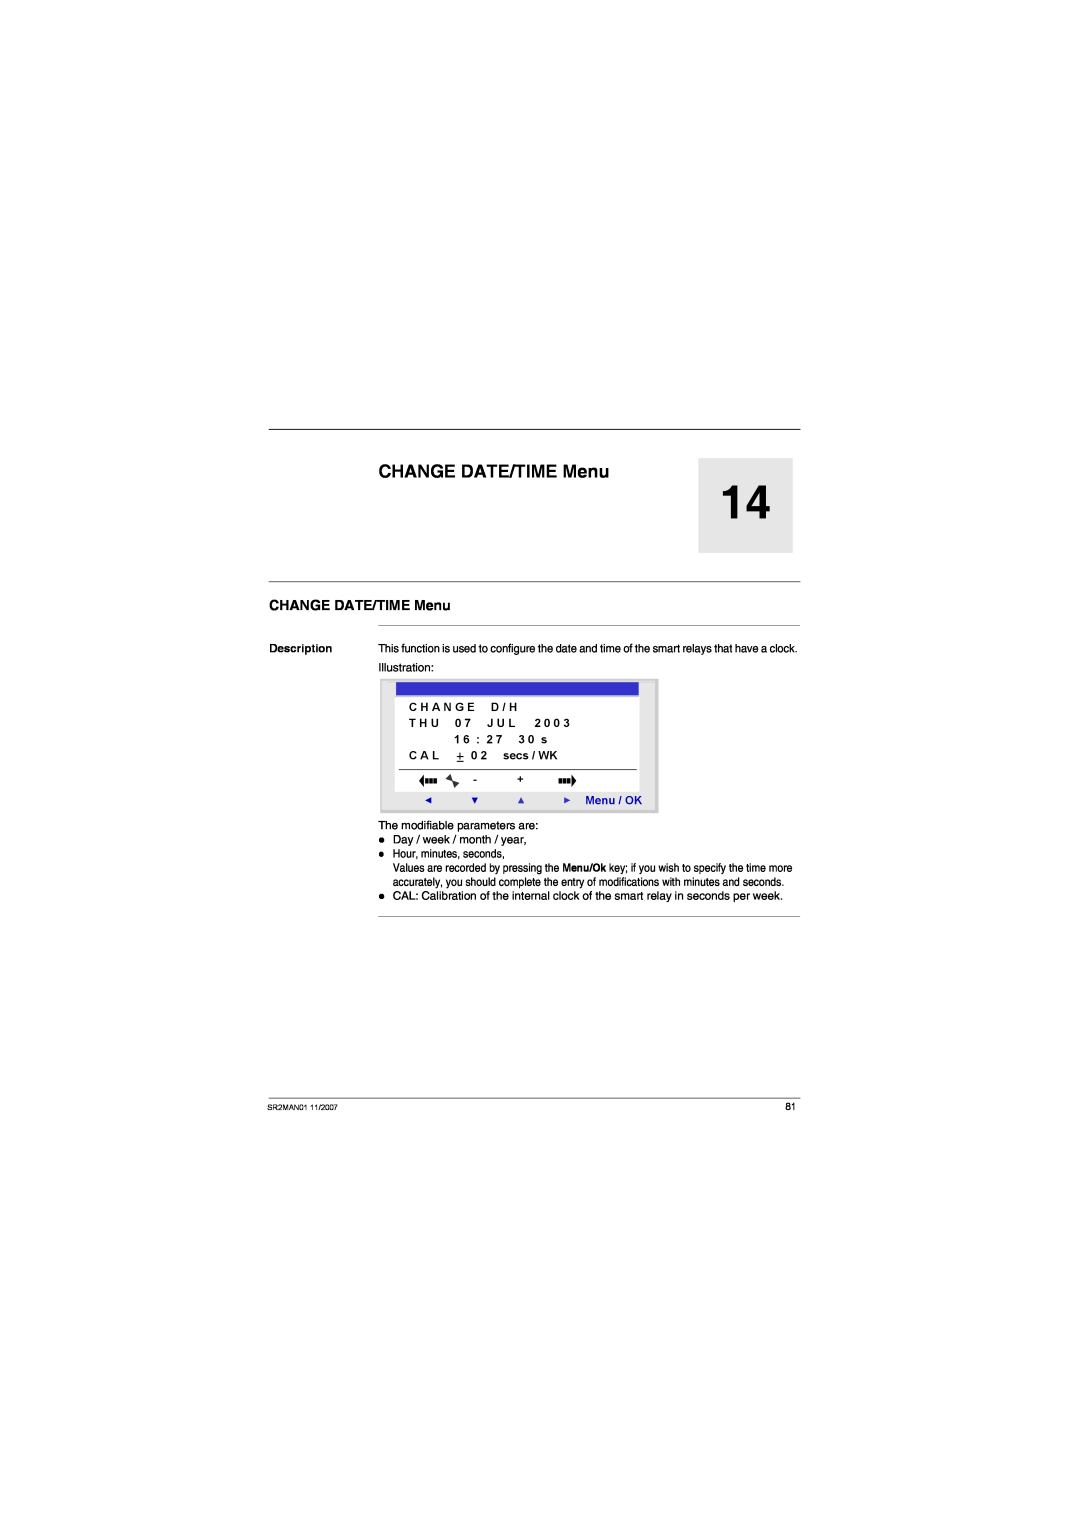 Schneider Electric SR2MAN01 CHANGE DATE/TIME Menu, Description, Illustration, C H A N G E, D / H, T H U 0 7 J U L 2 0 0 